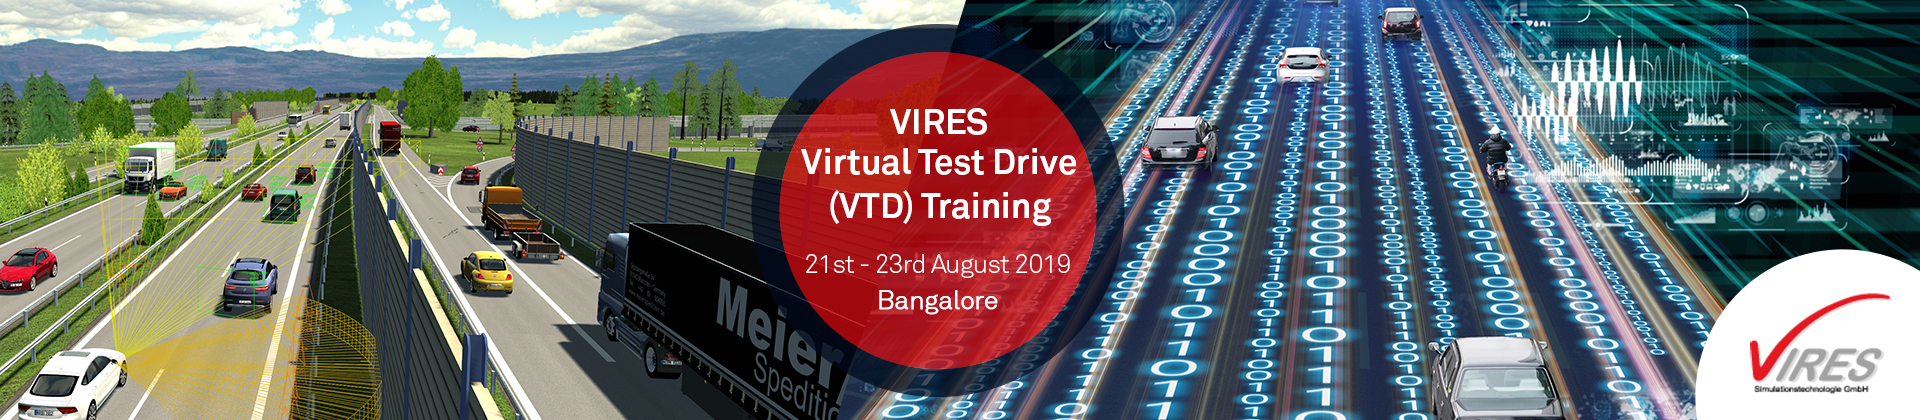 VIRES Virtual Test Drive (VTD) Training